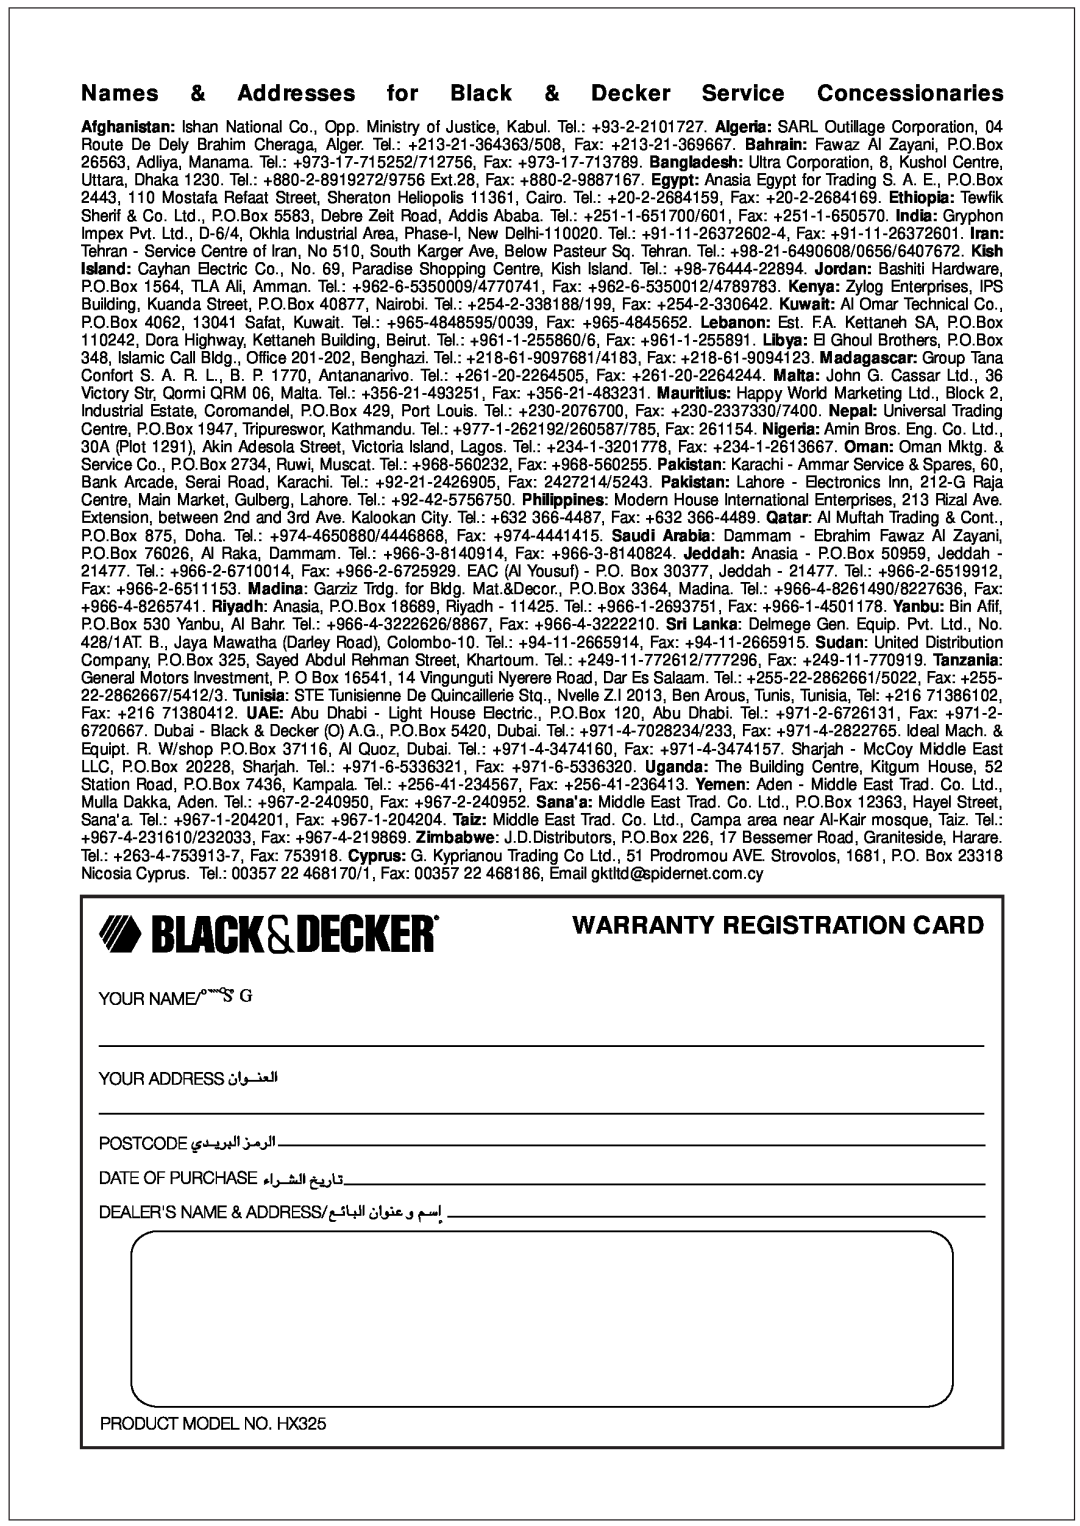 Black & Decker HX325 Warranty Registration Card, Names & Addresses for Black & Decker Service Concessionaries, º````S’G 